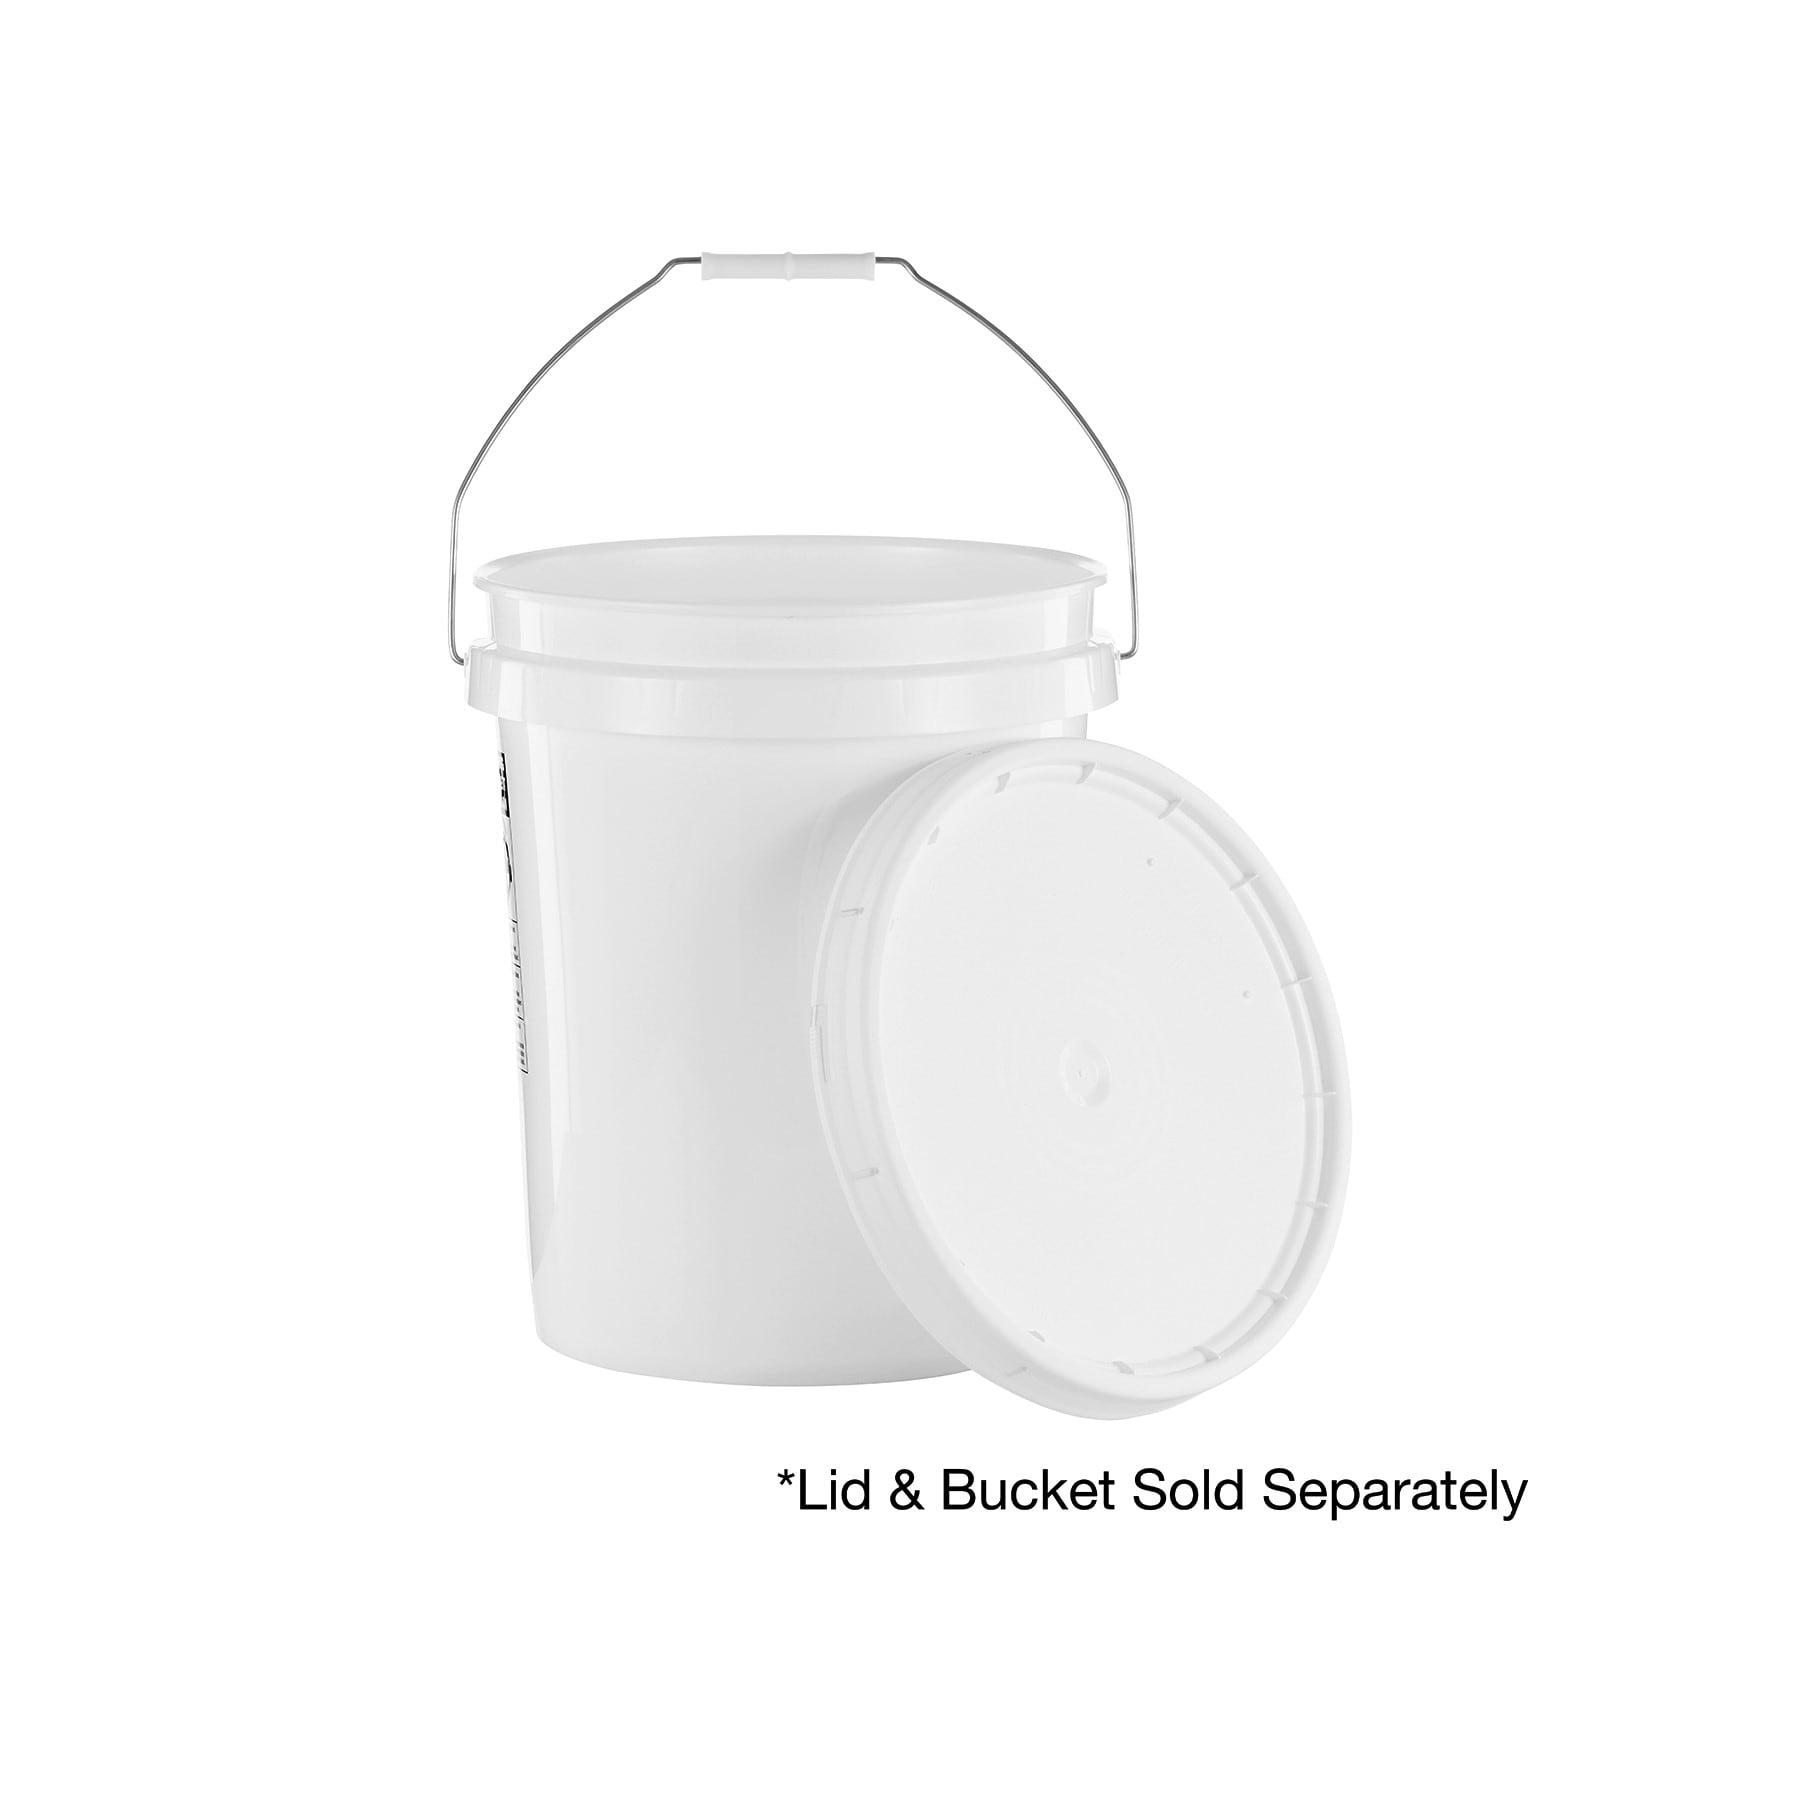 United Solutions 5 Gallon Round Utility Bucket, Comfort Handle